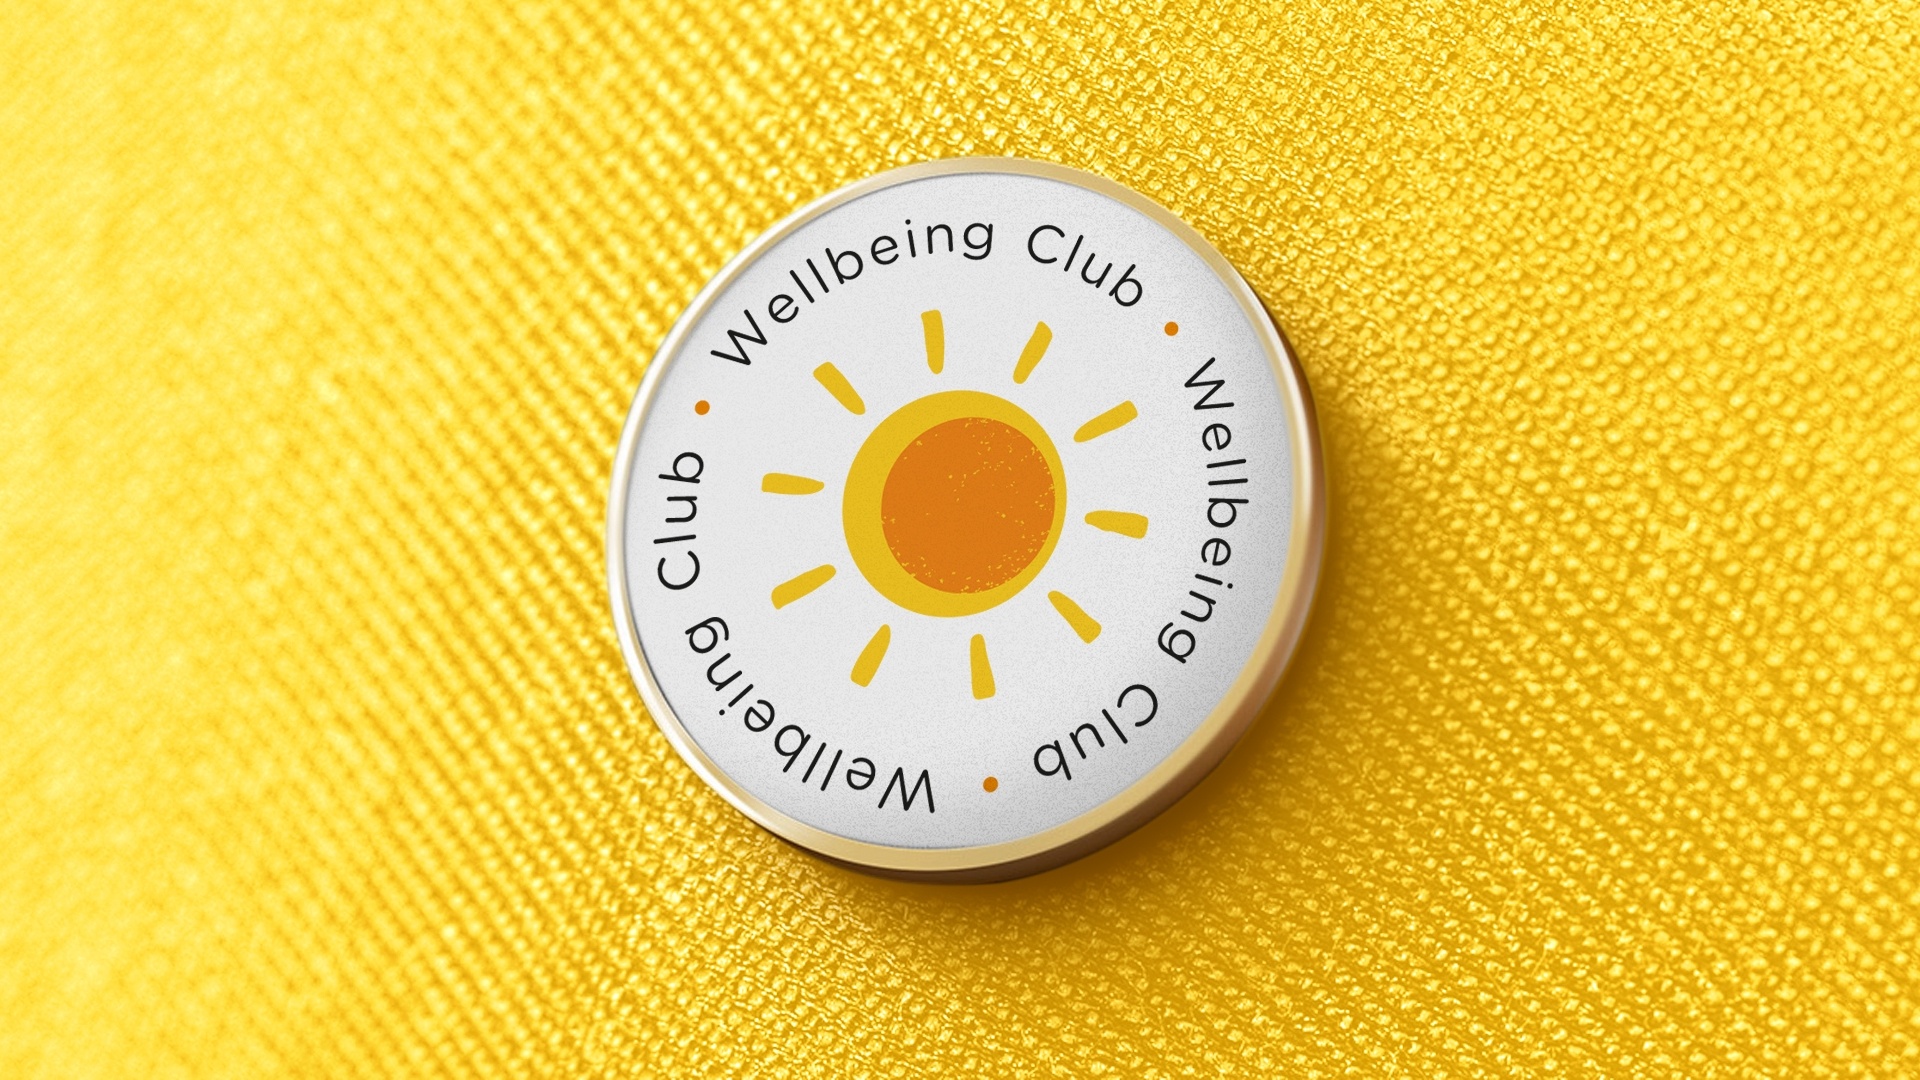 Wellbeing Club Badge 02